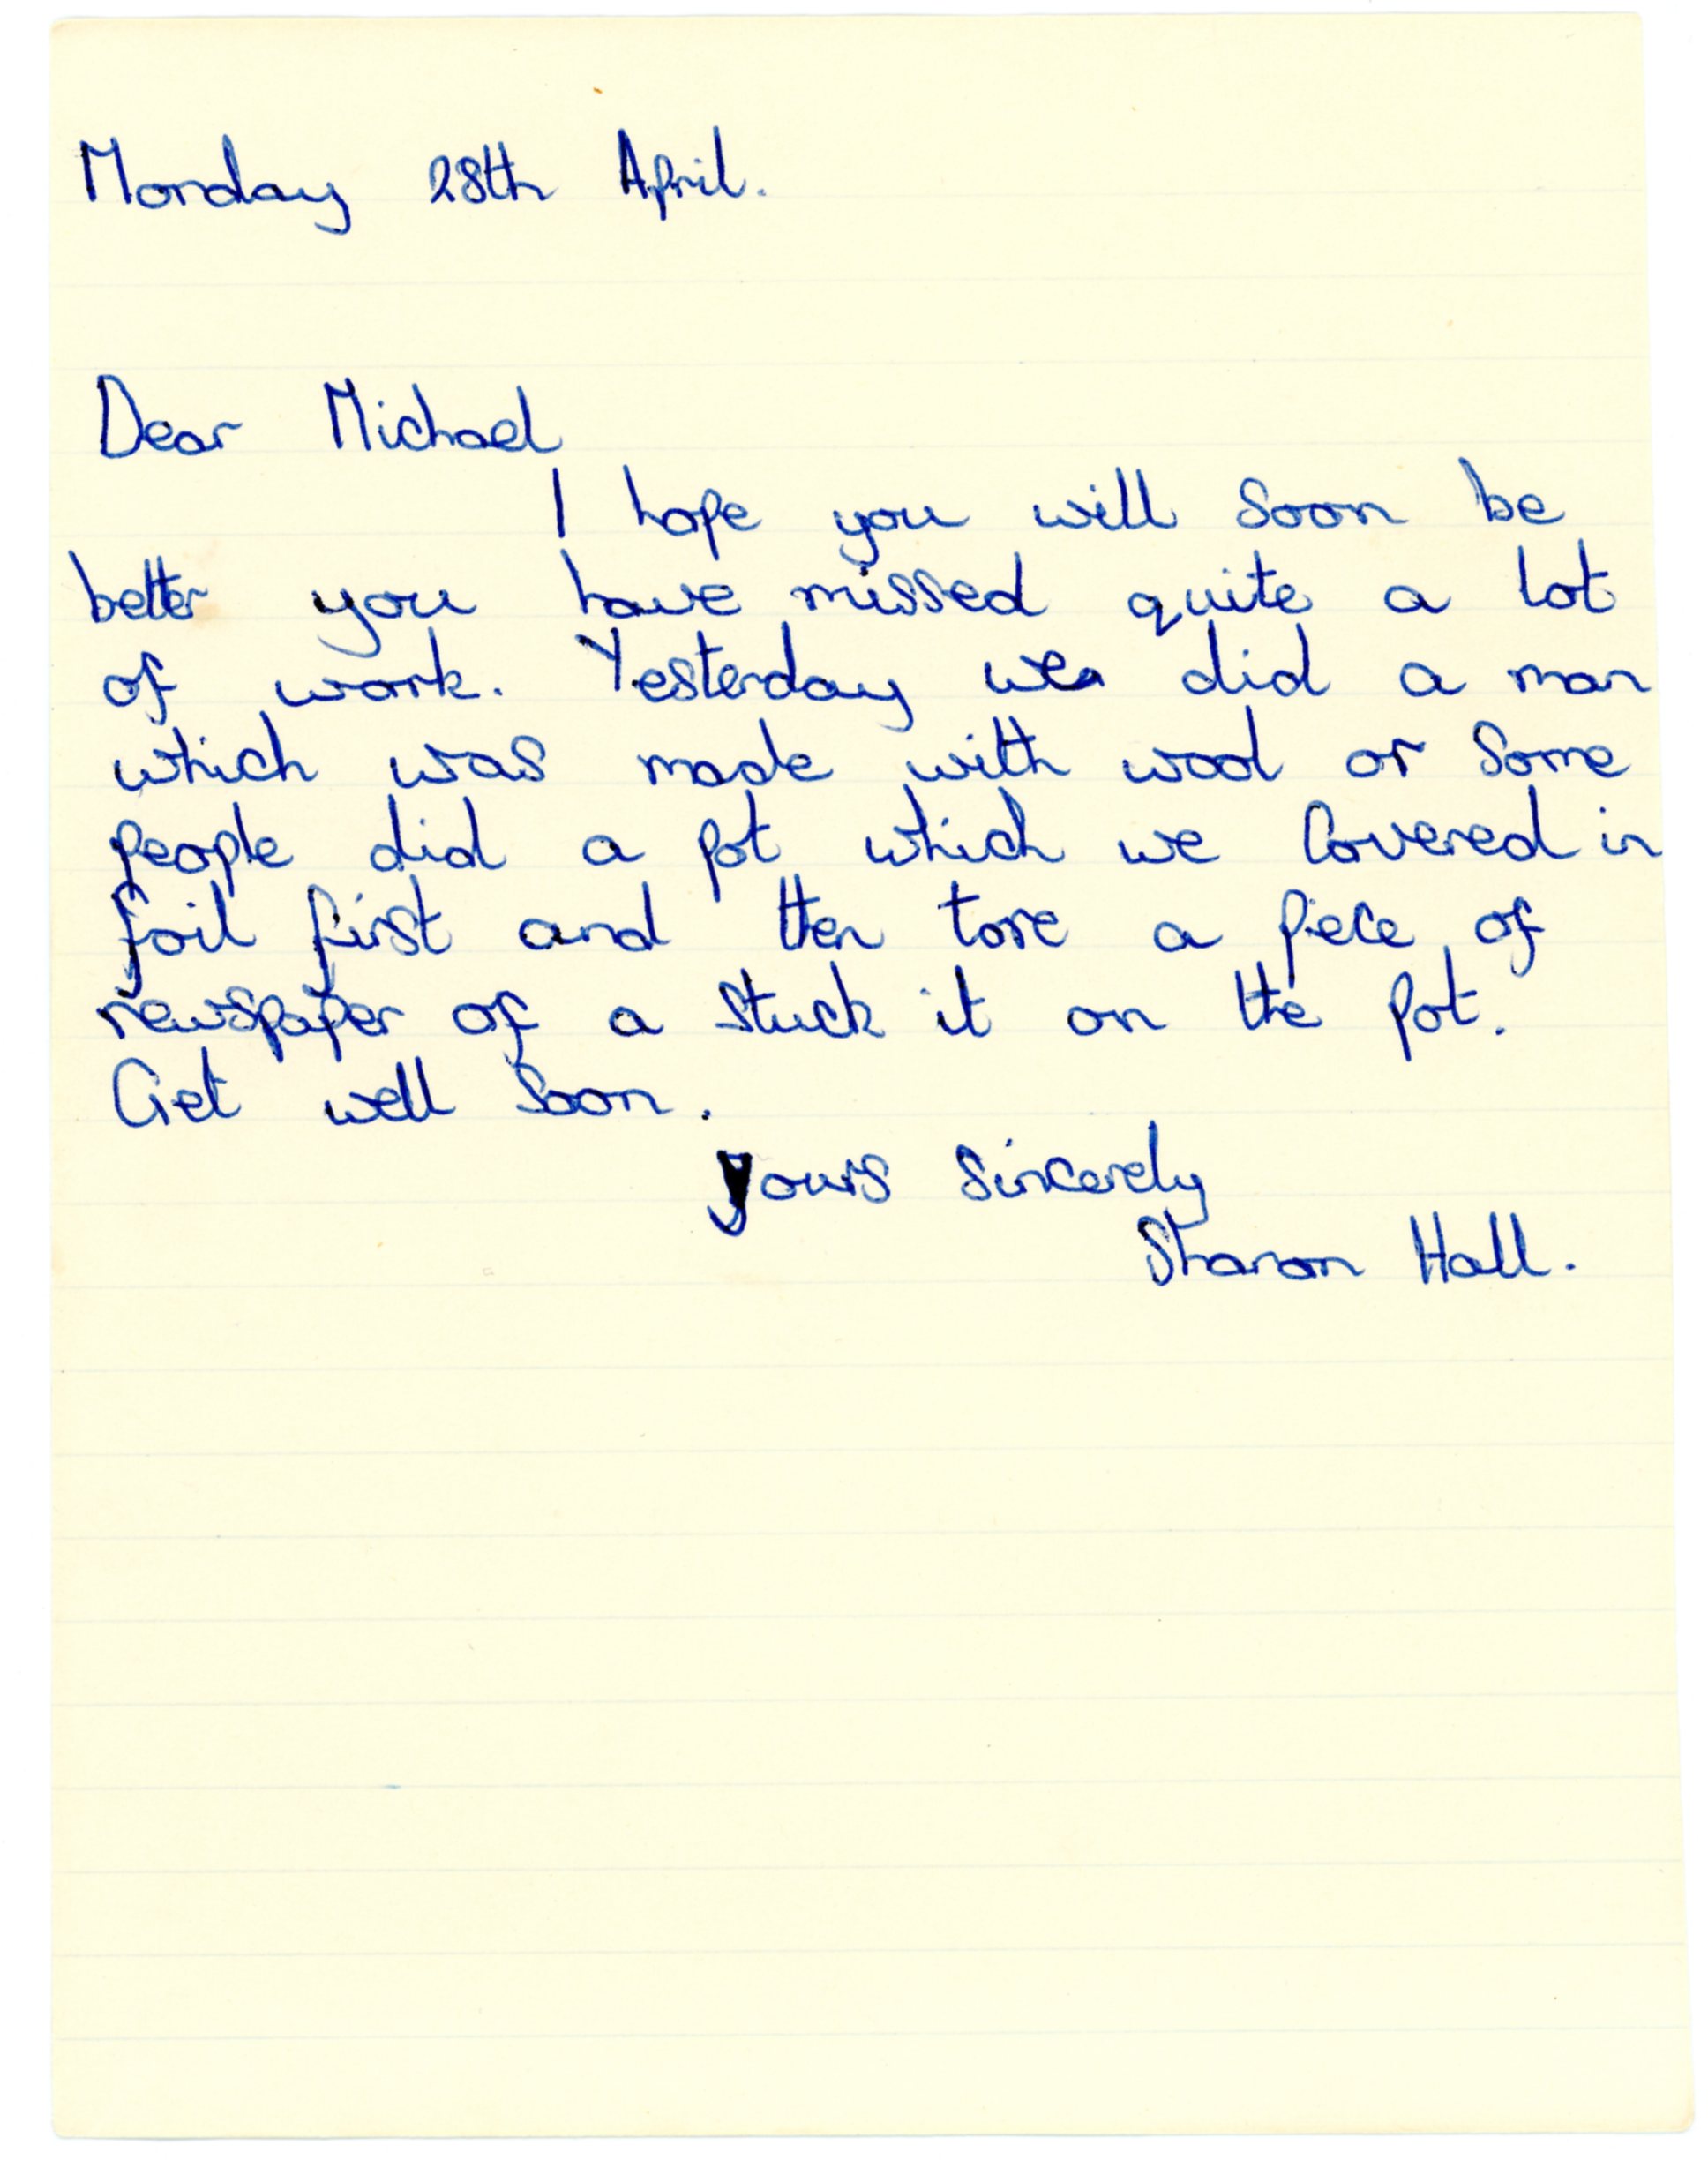 Sharon Hall's original letter